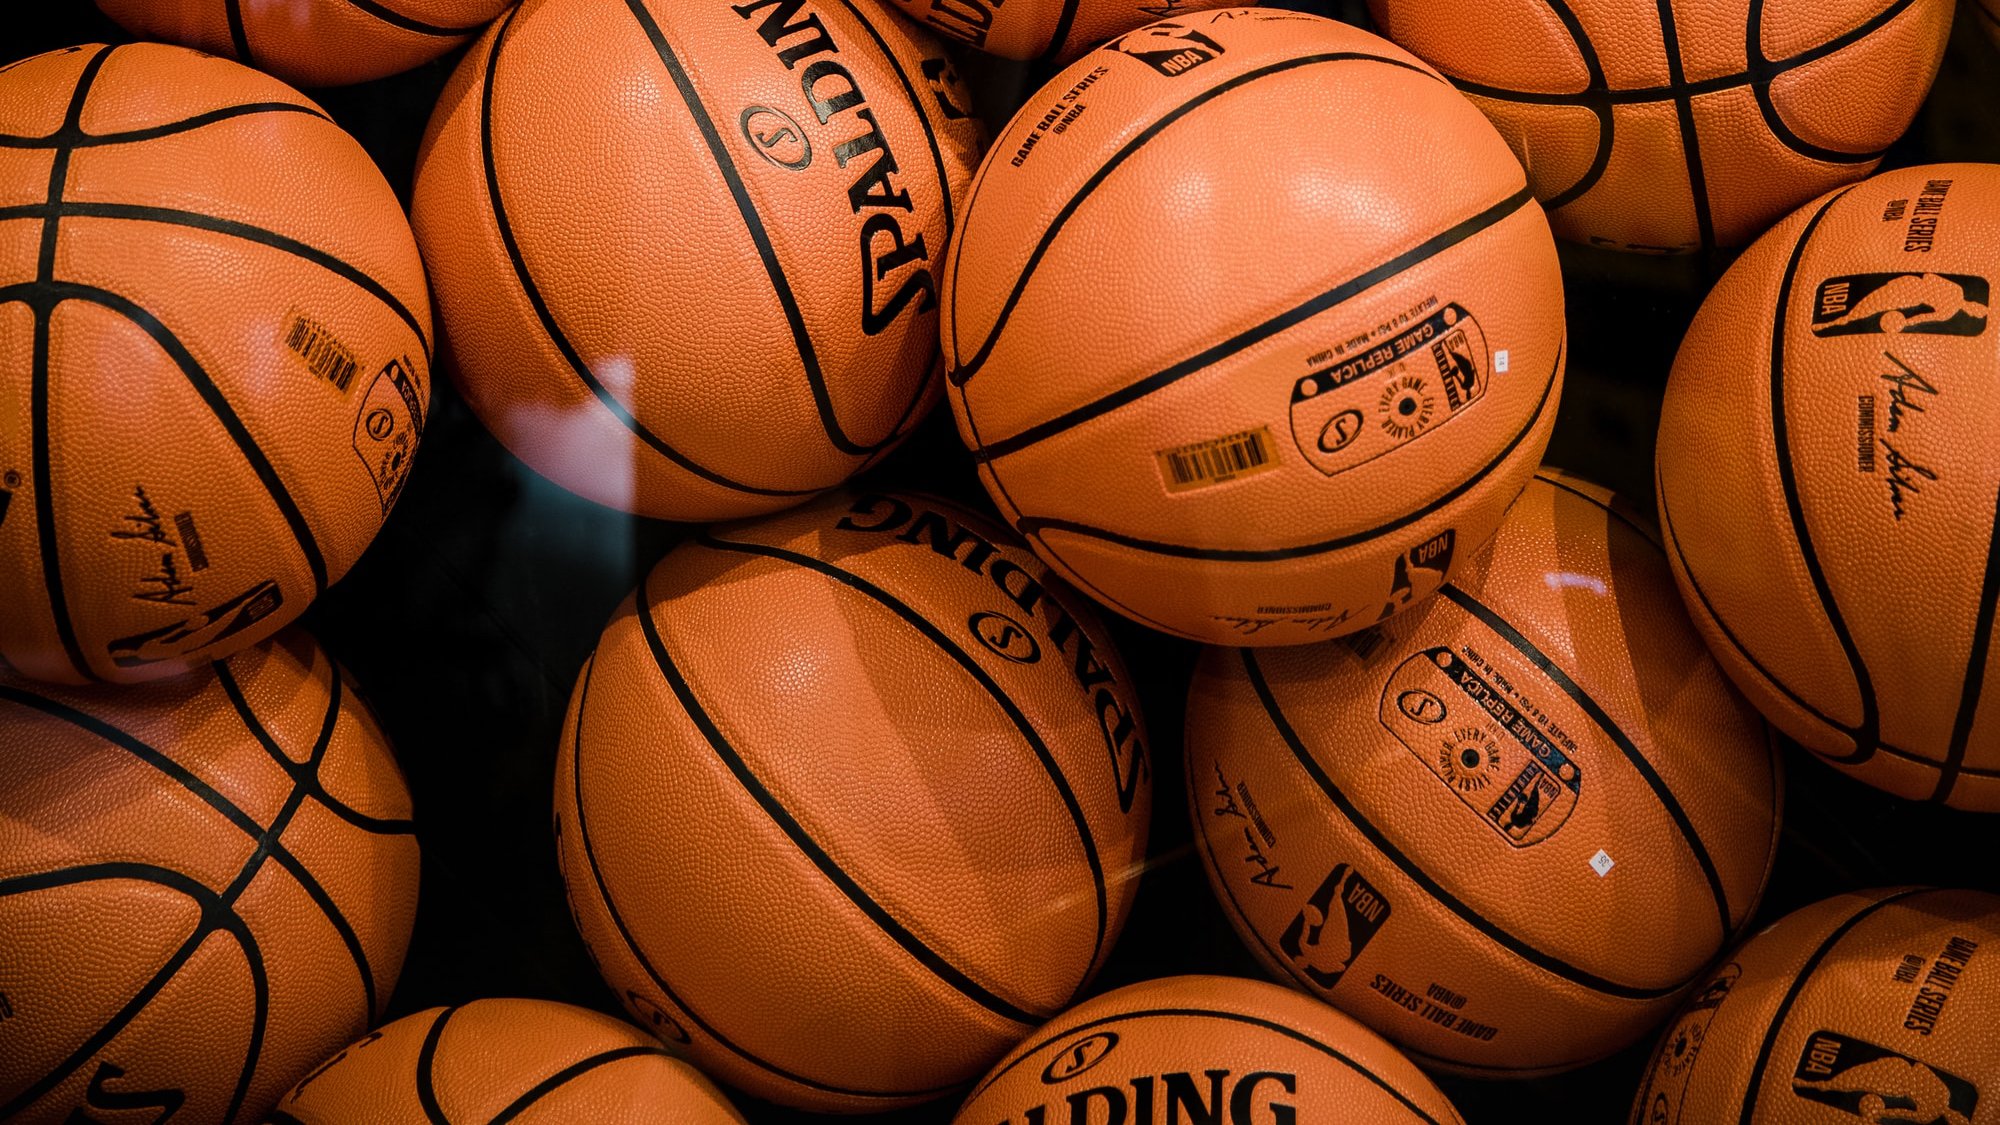 2022 NBA Championship Odds Favor the Brooklyn Nets